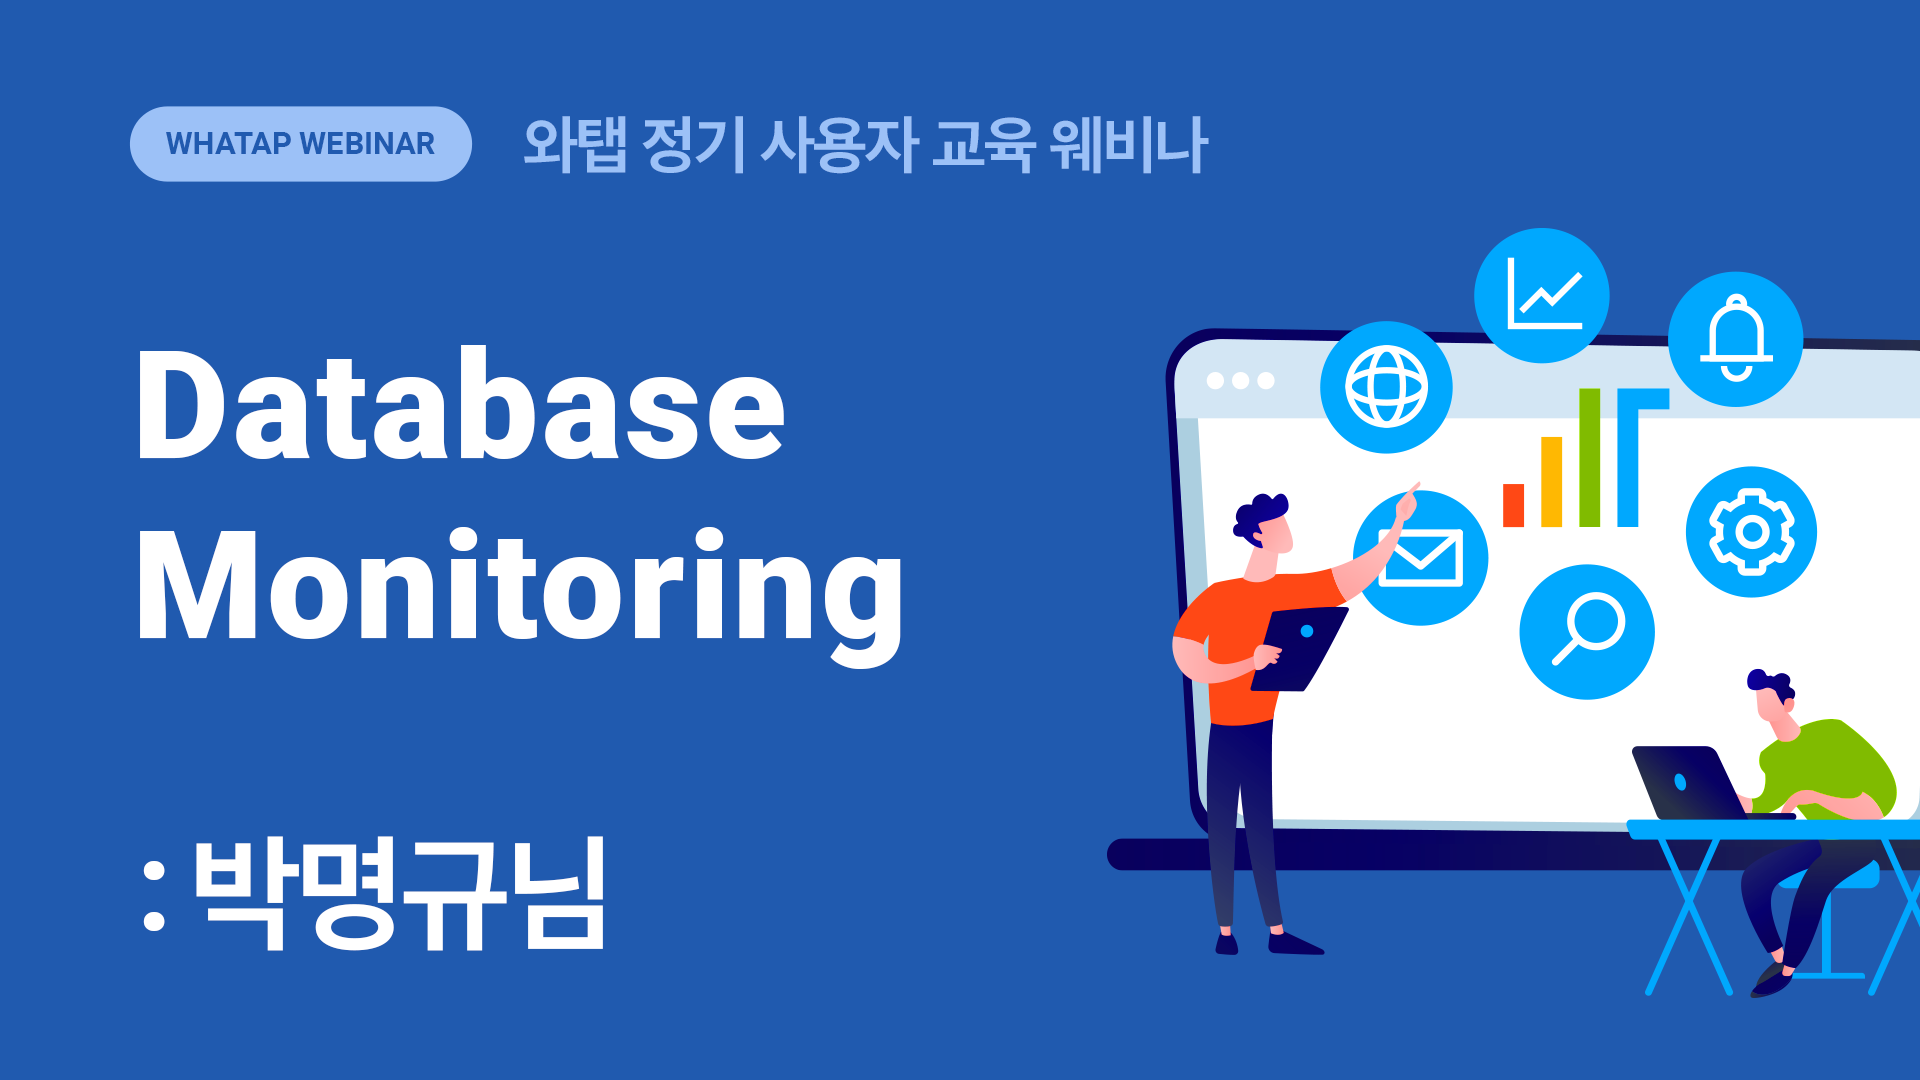 whatap database-monitoring webinar